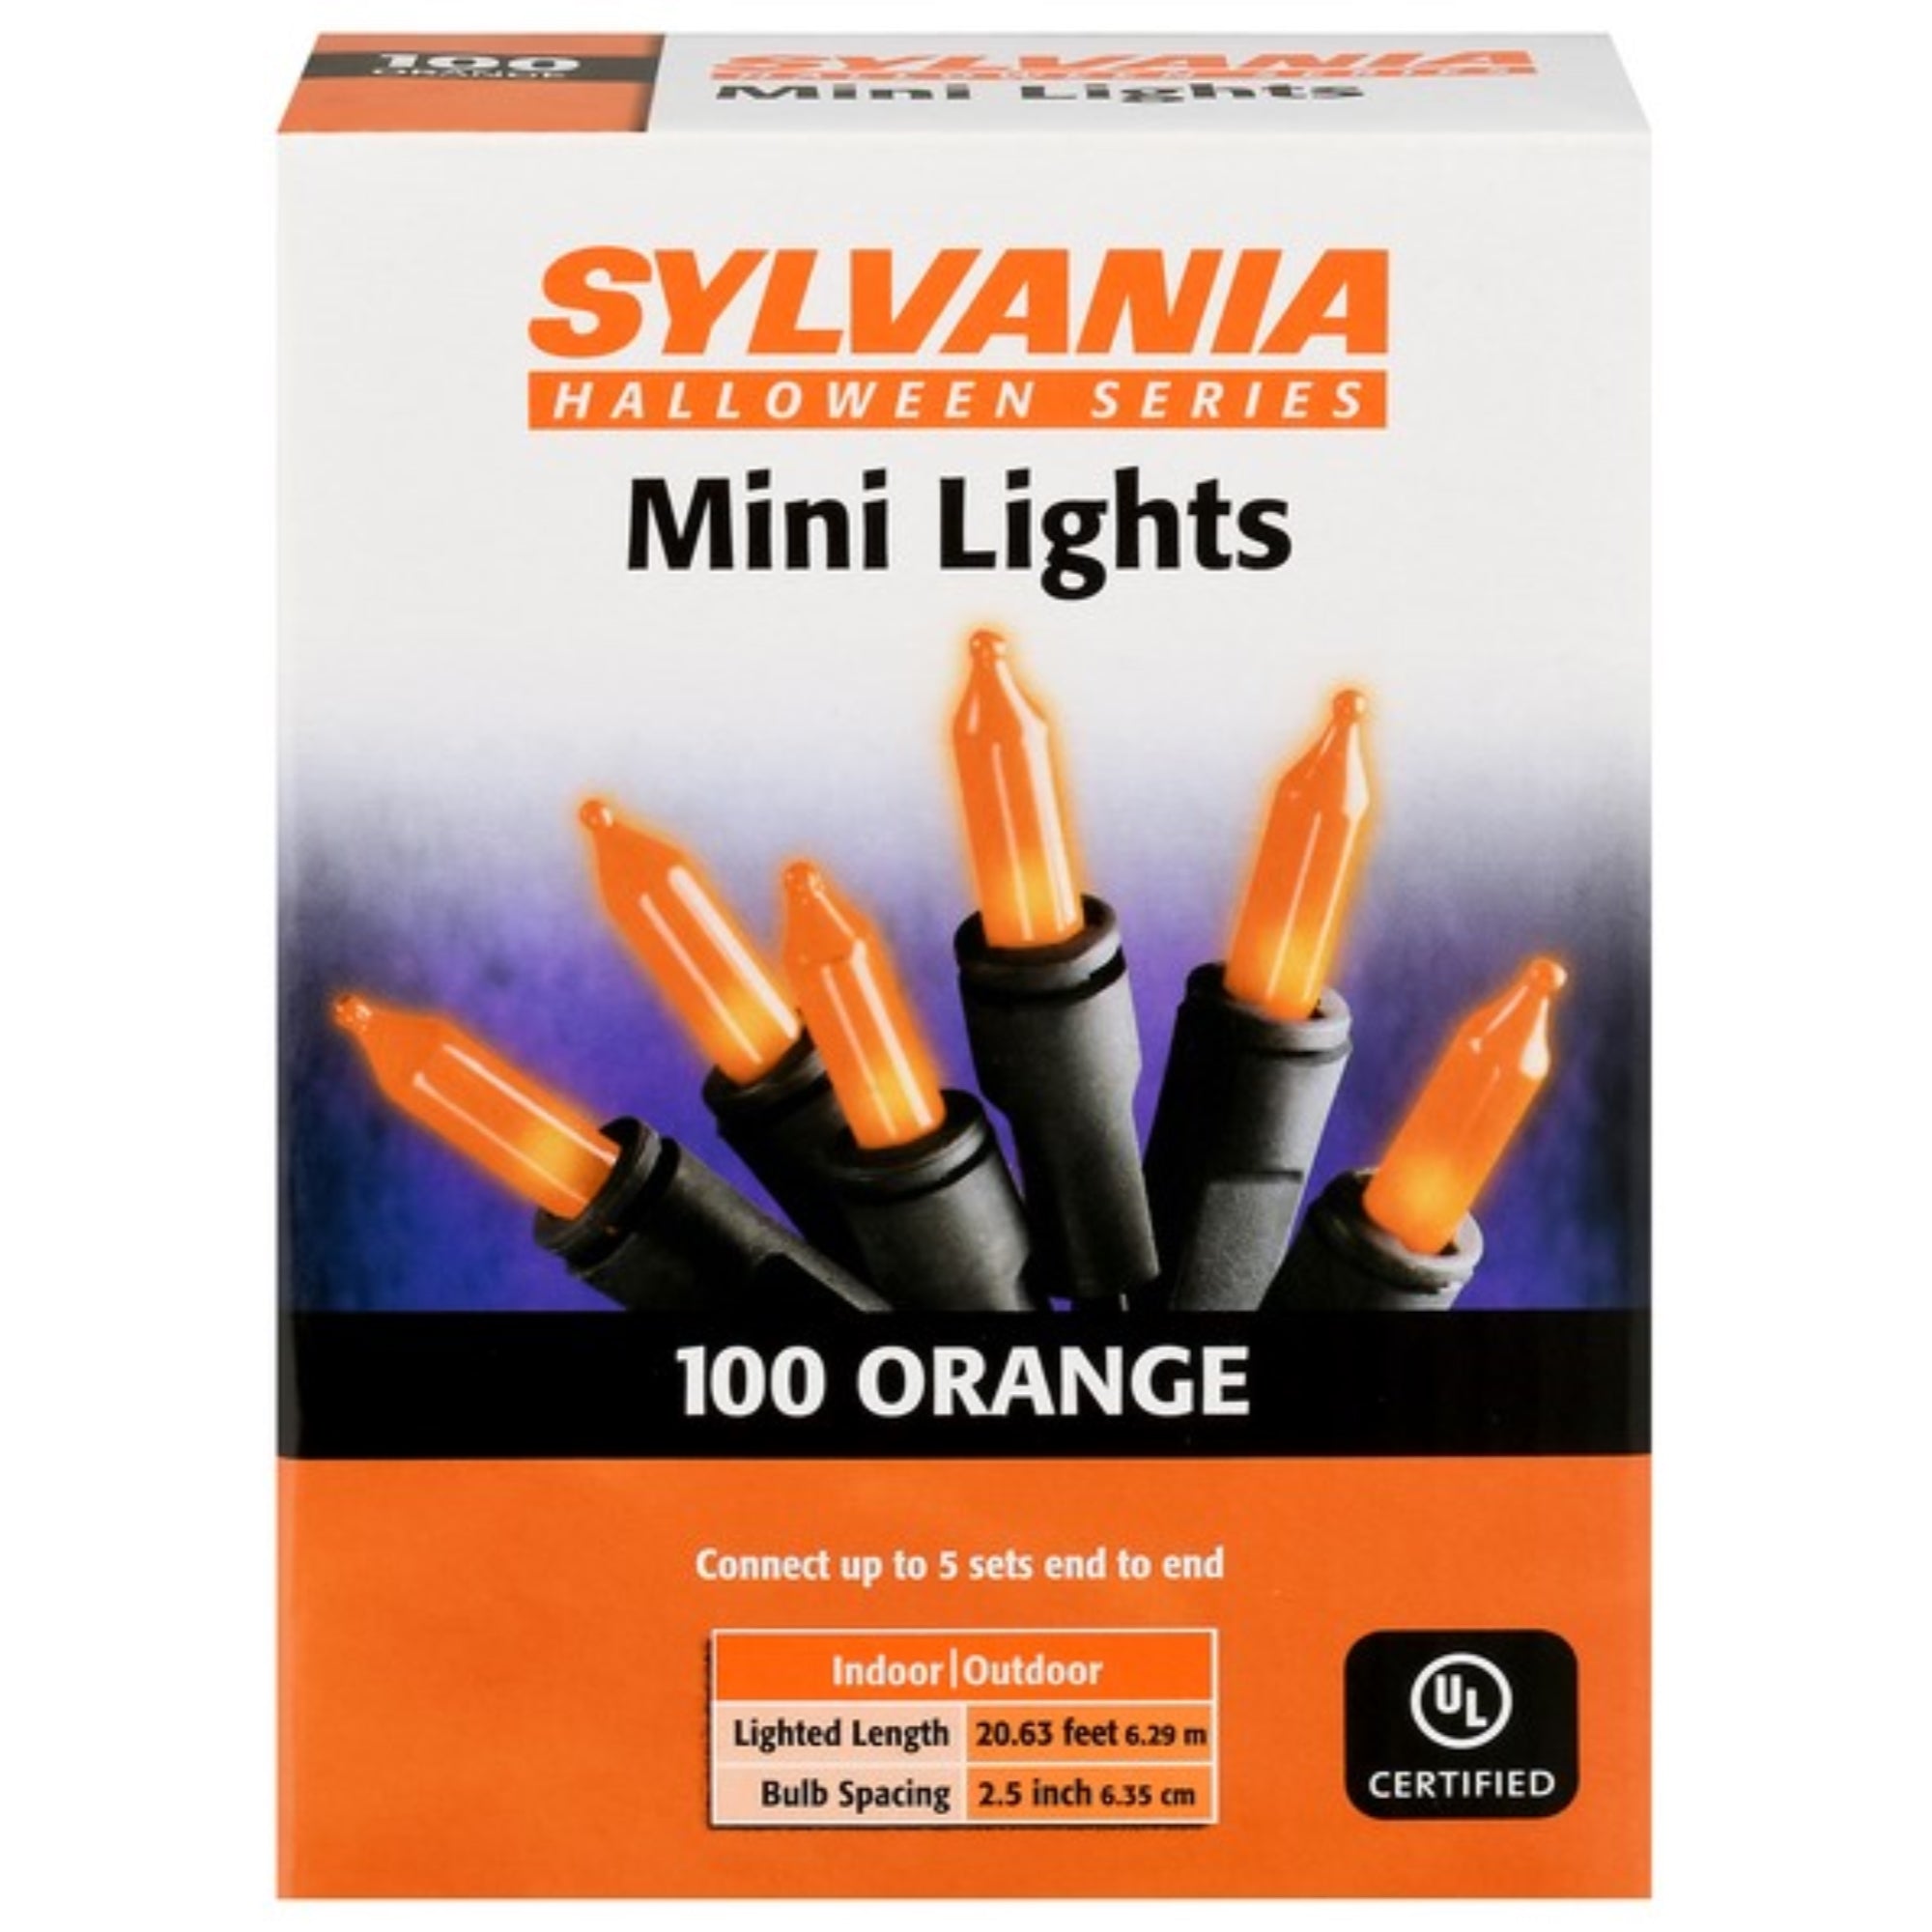 Sylvania Indoor Outdoor Halloween String Lights, 100 Orange Mini Bulbs, Black Wire, 20.5' Lighted Length